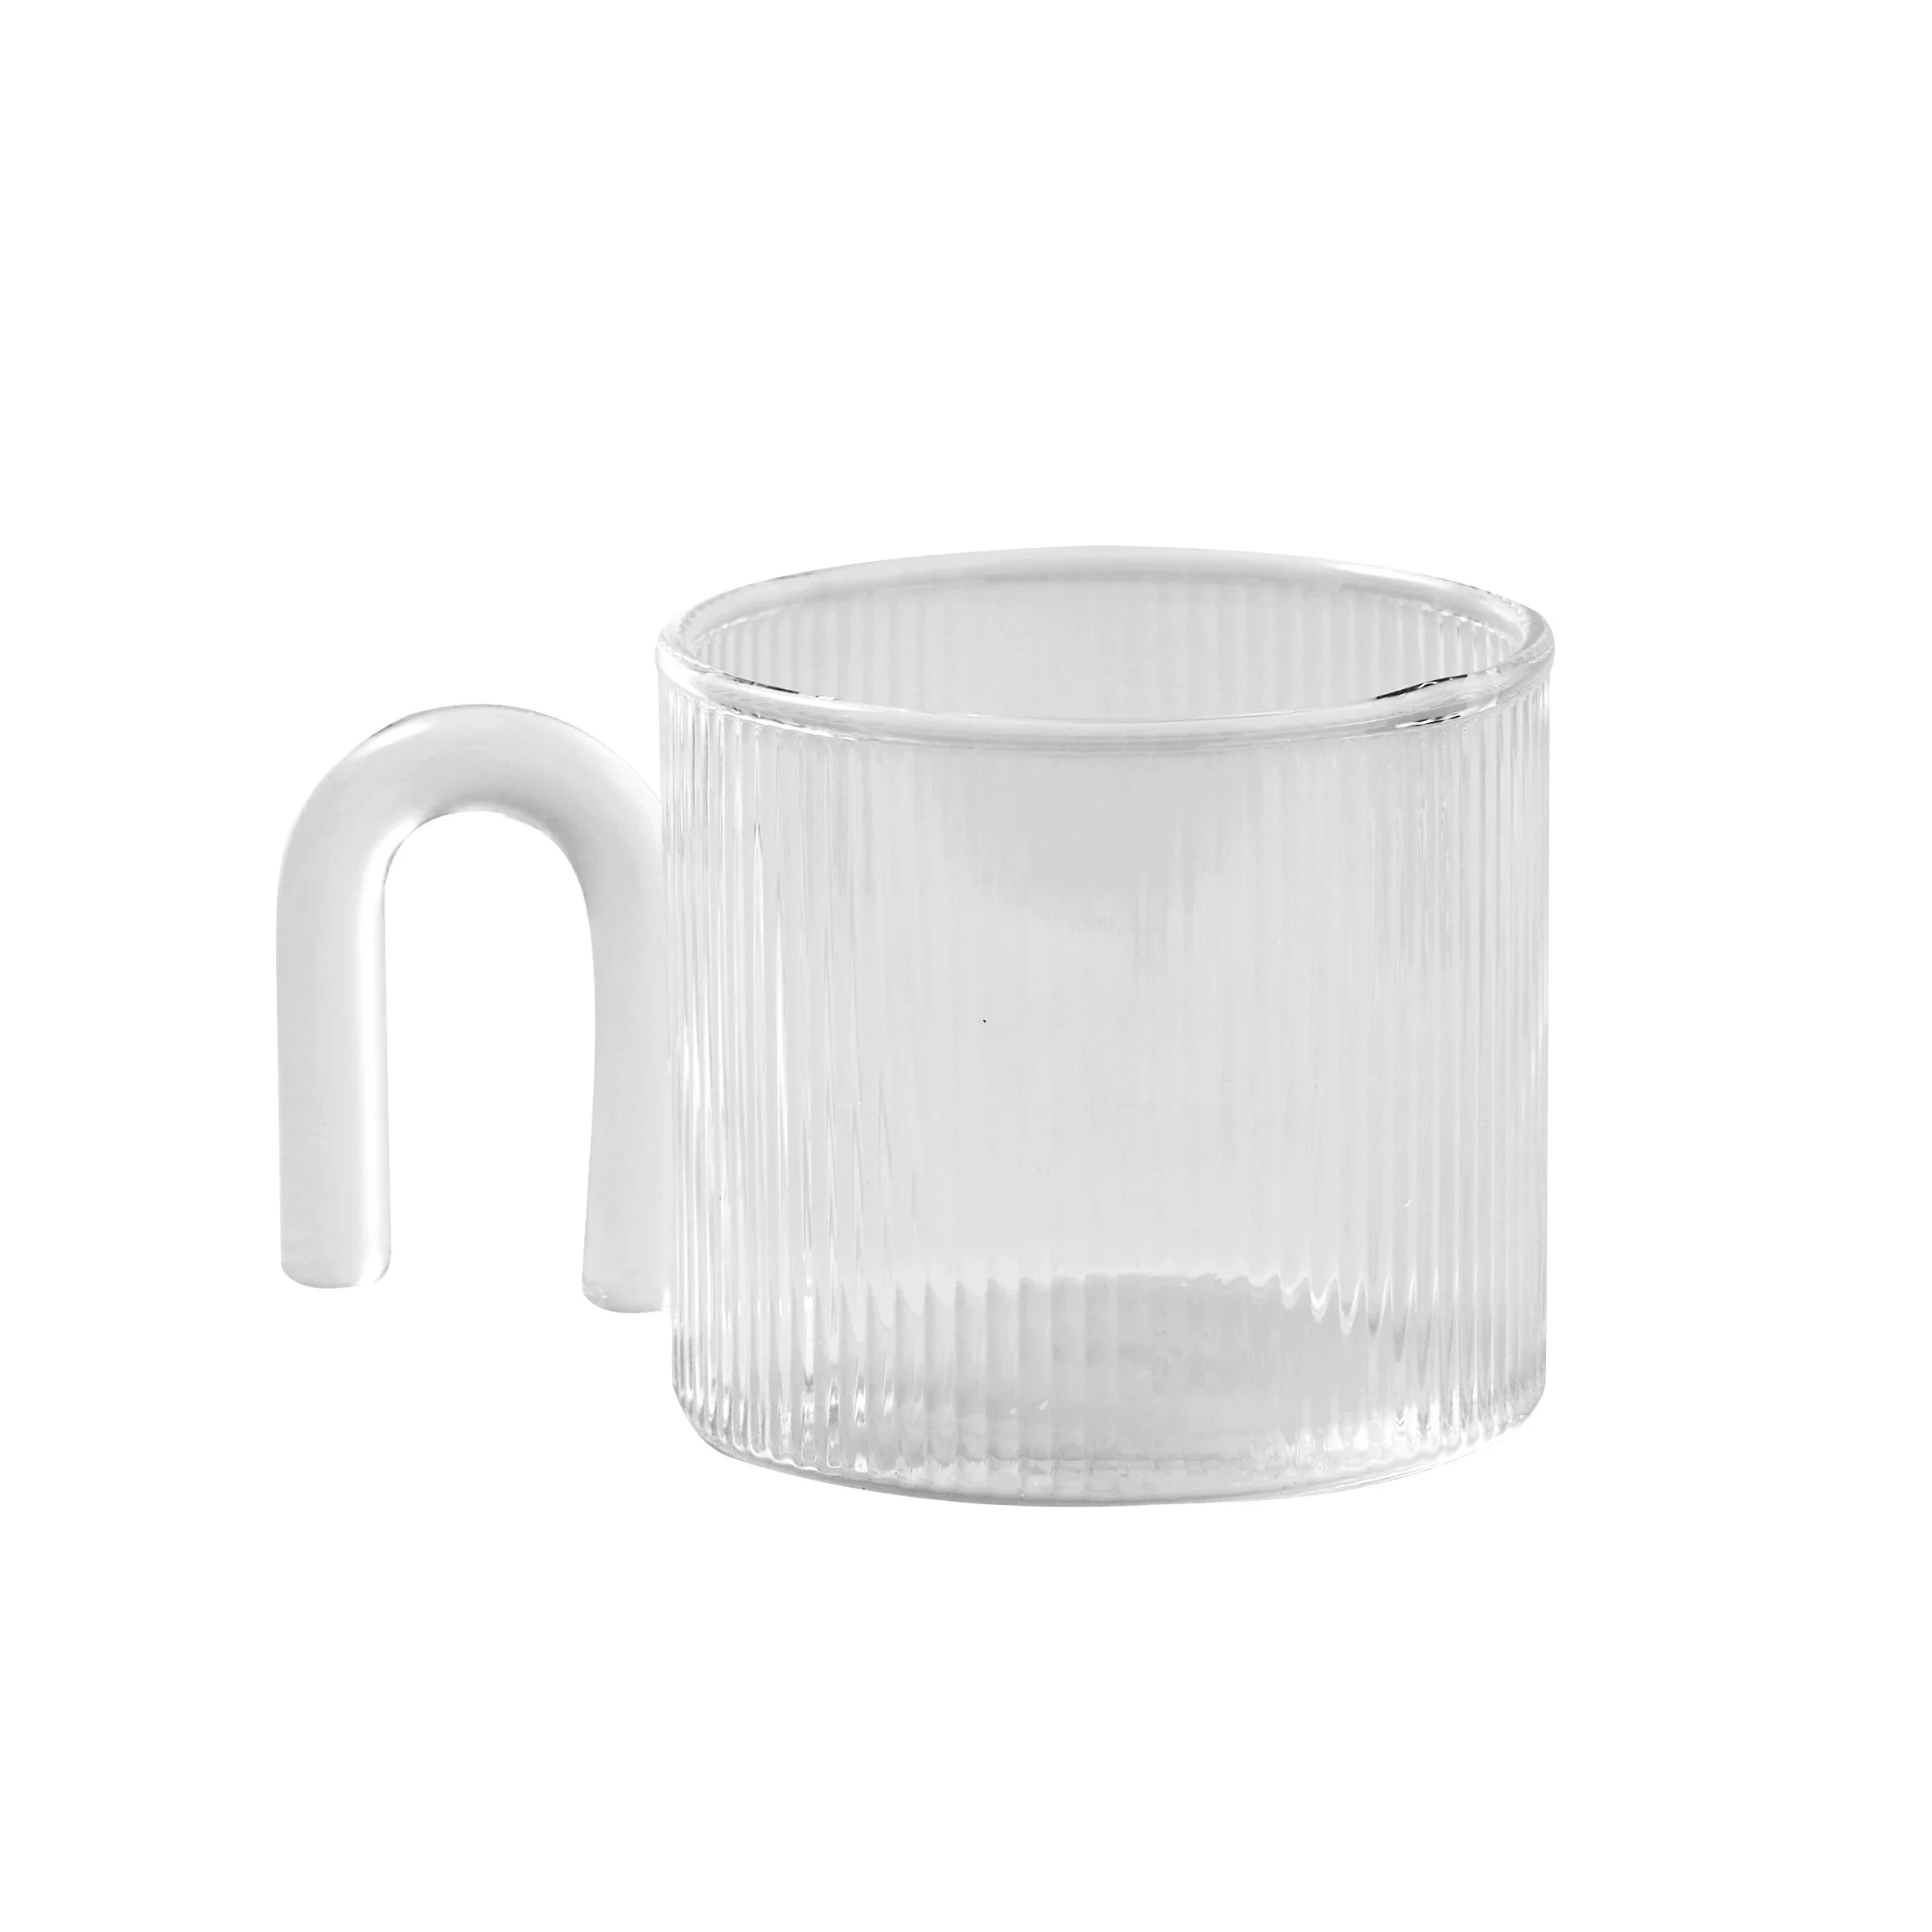 https://ae01.alicdn.com/kf/Sb750d45a2d274ebf8f48e63f5eccfad2m/Colorful-Handle-Ripple-Coffee-Cup-Heat-resistance-Glass-Mug-Milk-Tea-Office-Cups-Drinkware-Birthday-Gift.jpg